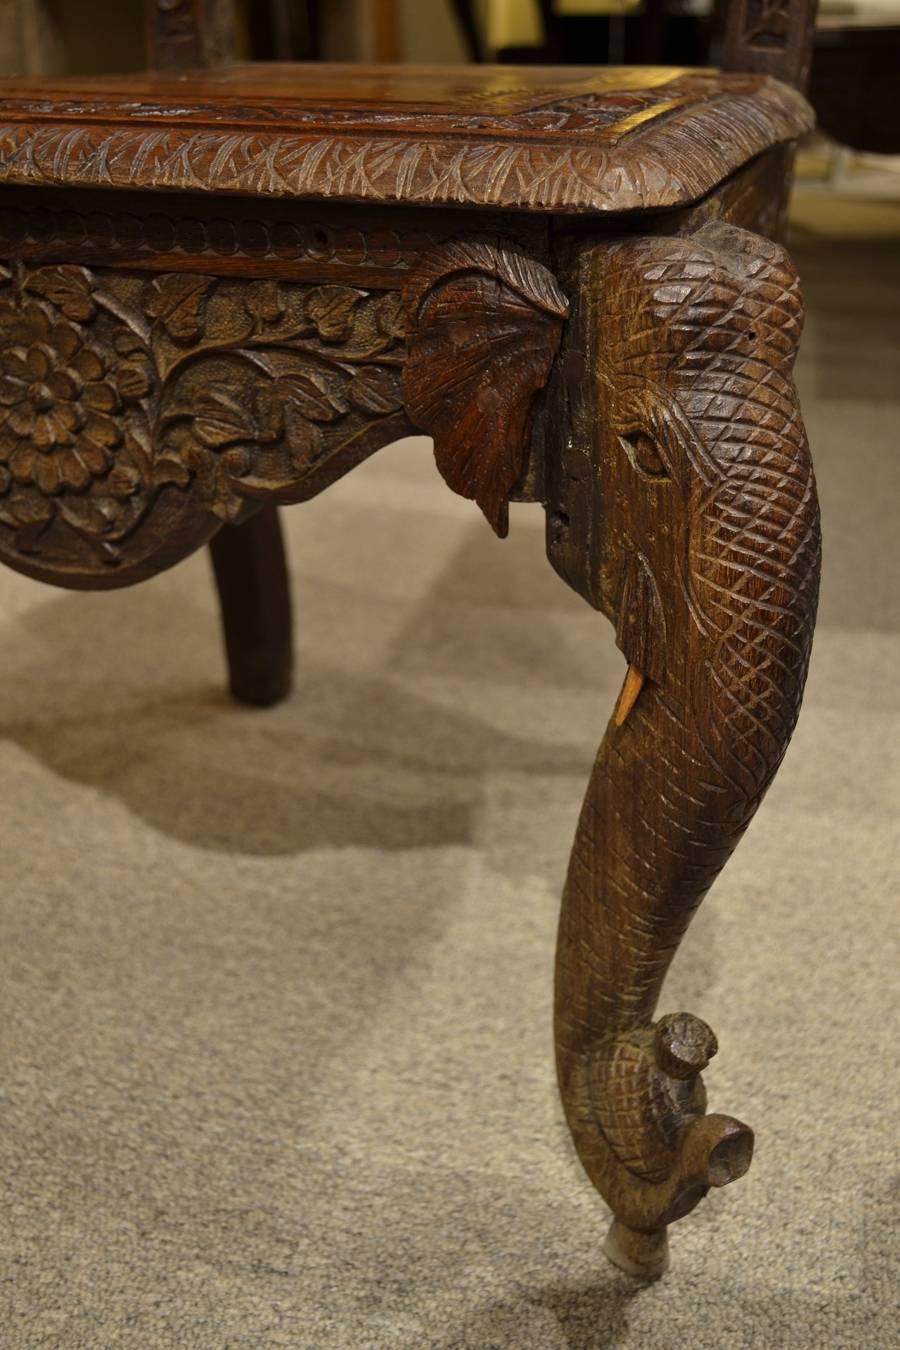 British Indian Ocean Territory Set of Carved Elephant Sidechairs in Teak